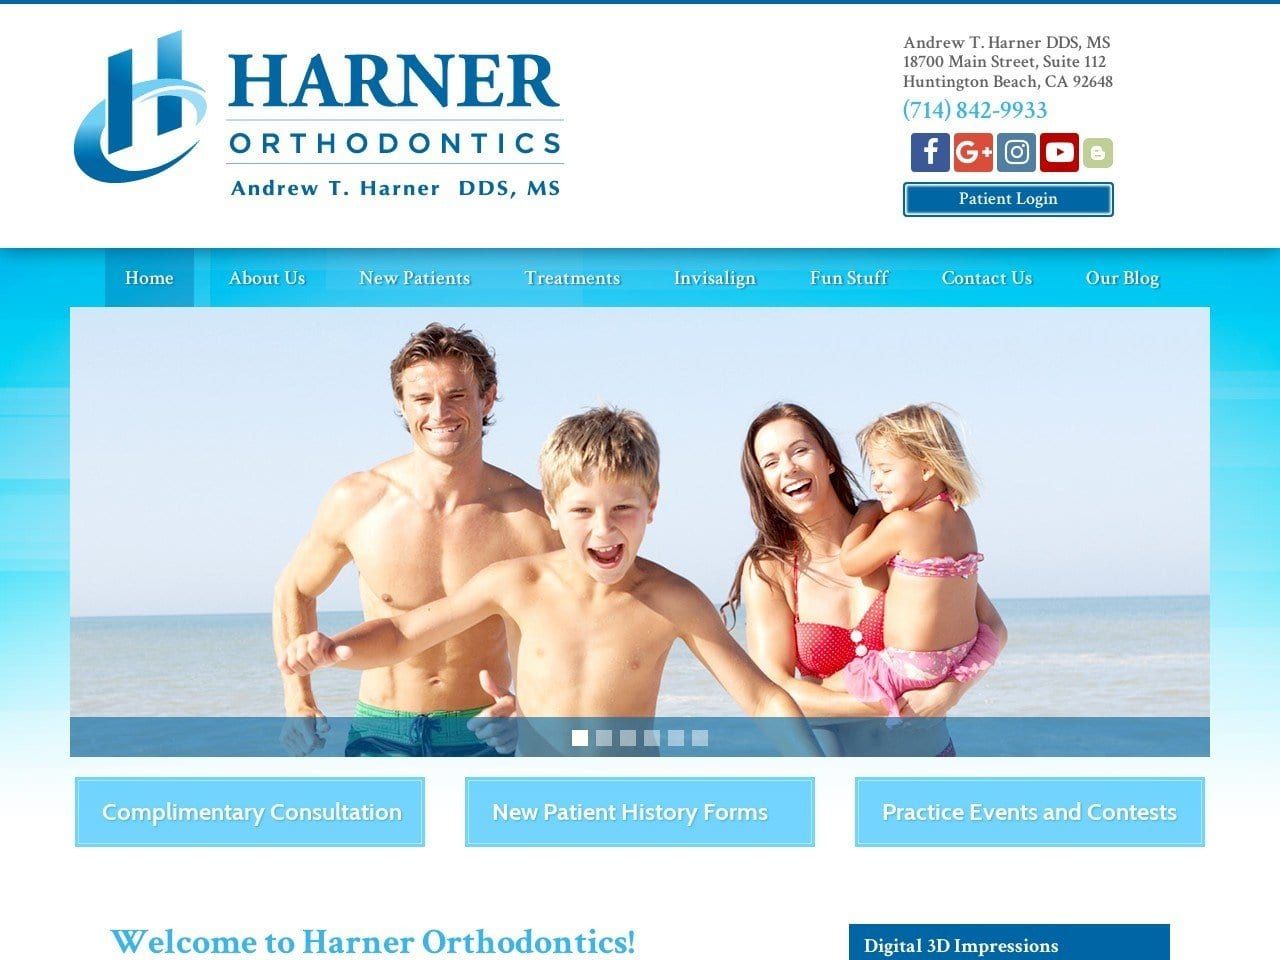 Harner Orthodontics Andrew Harner DDS MS Website Screenshot from harnerorthodontics.com